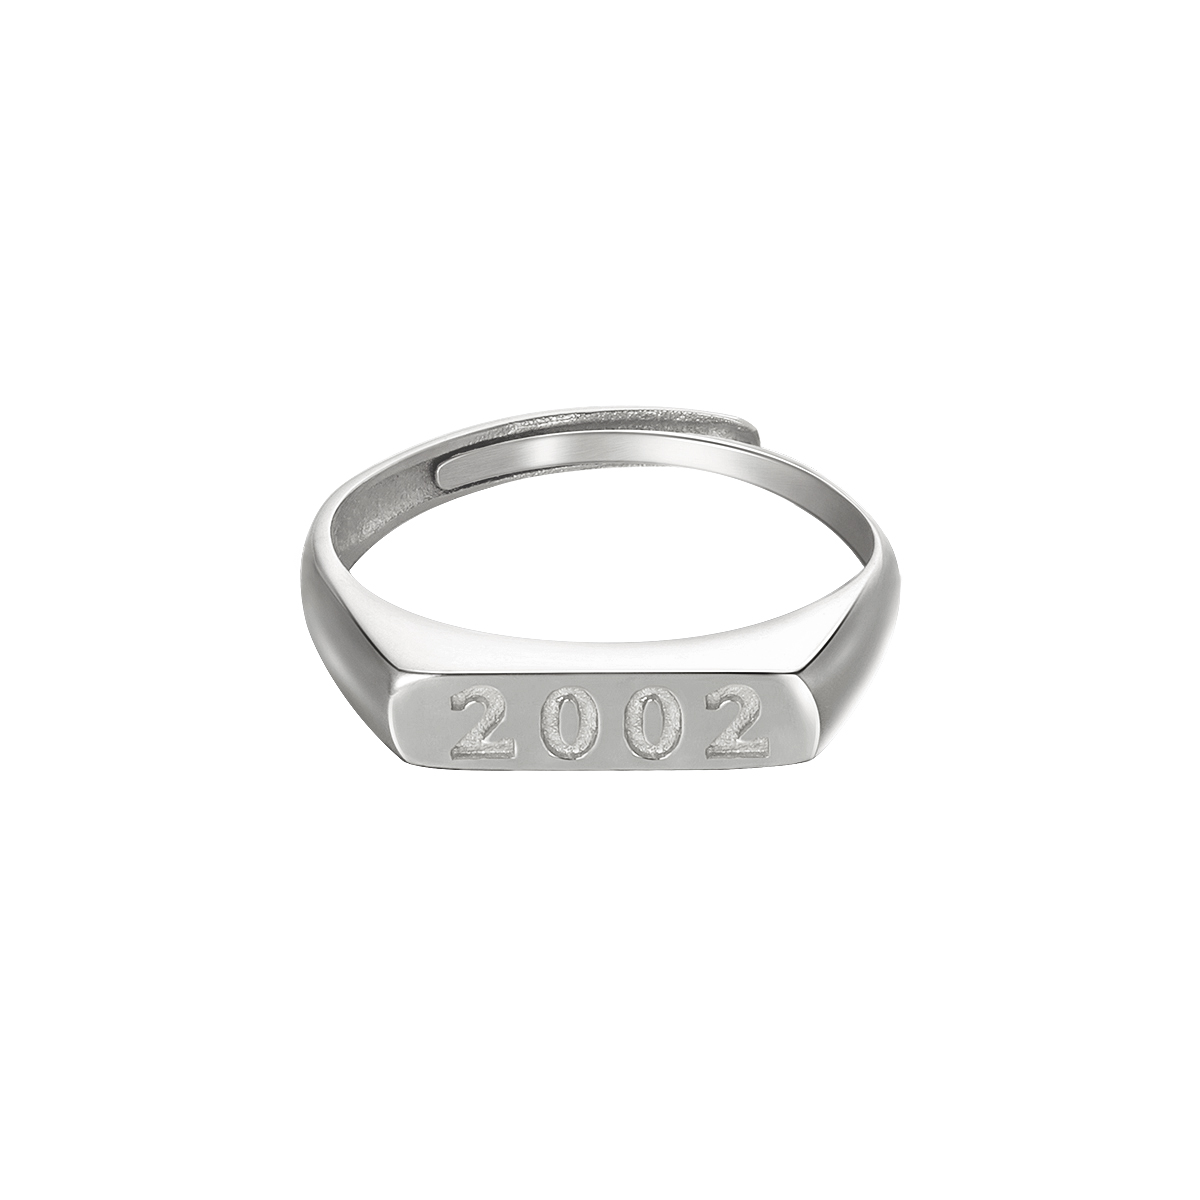 Ring Year Of Birth - 2002